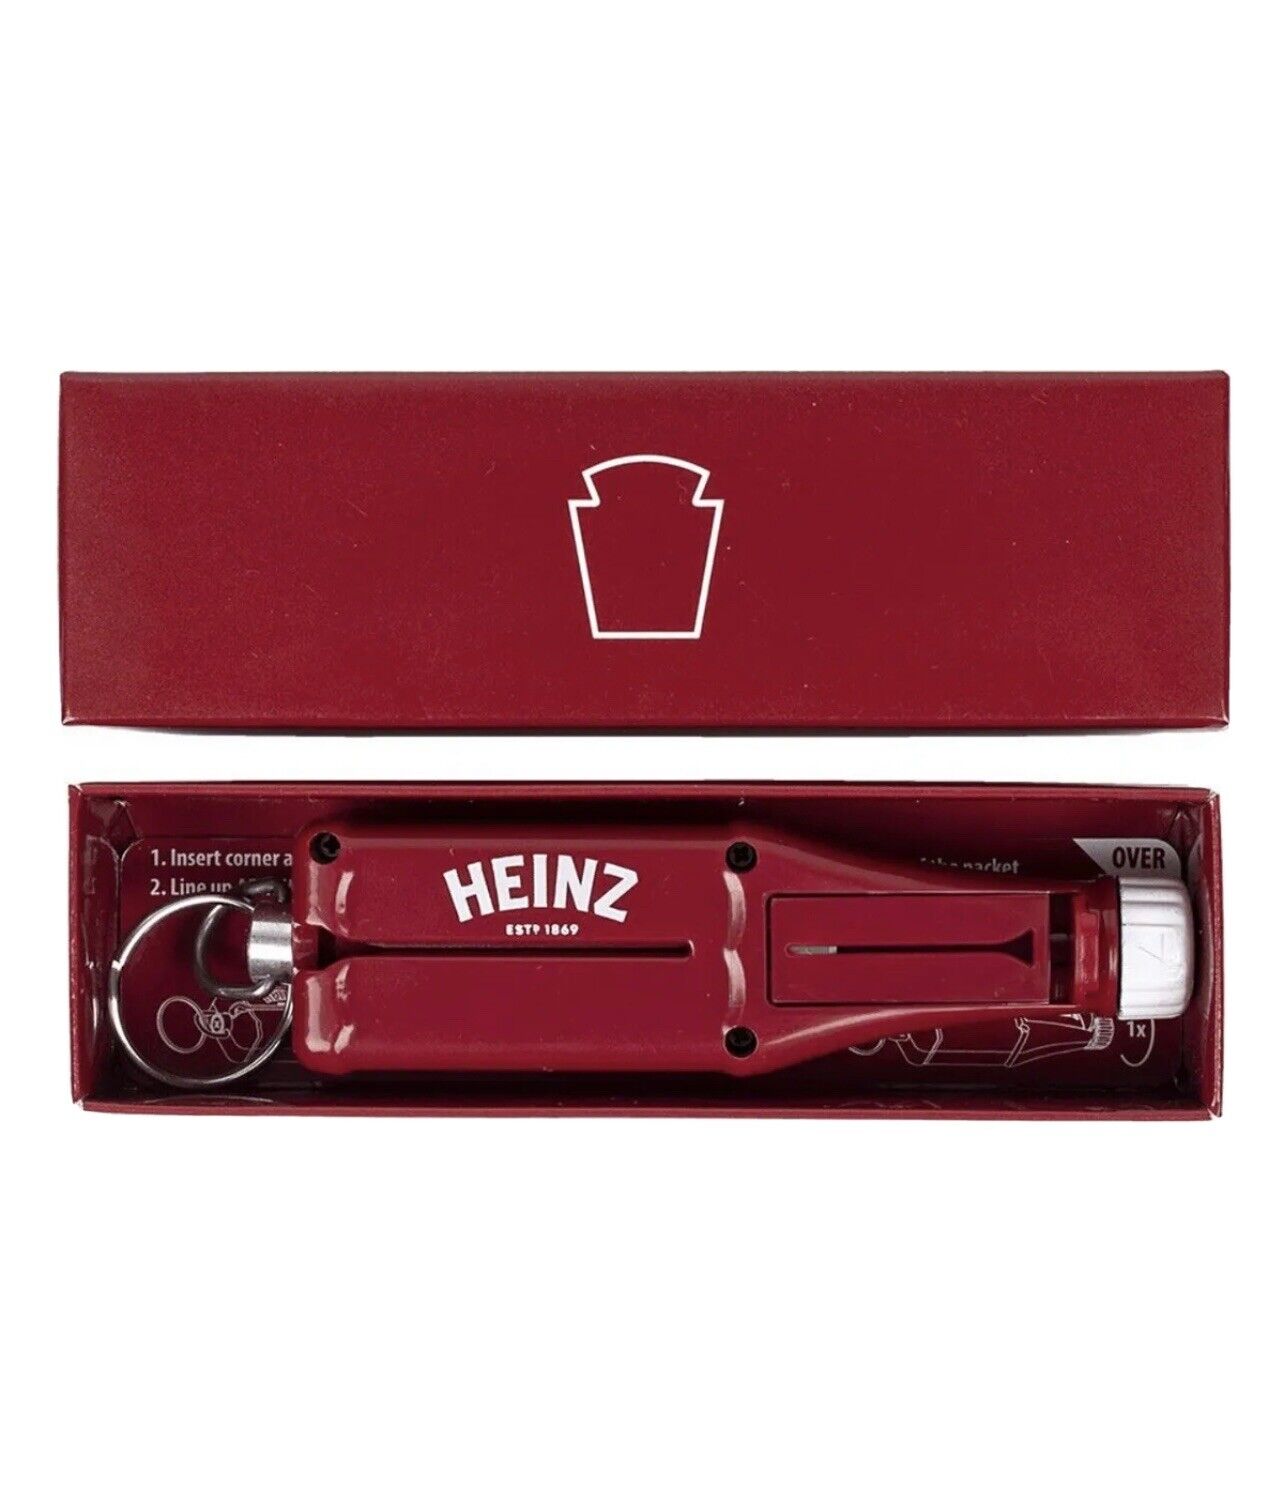 New Heinz Ketchup Packet Roller Keychain NIB Sealed Key Chain